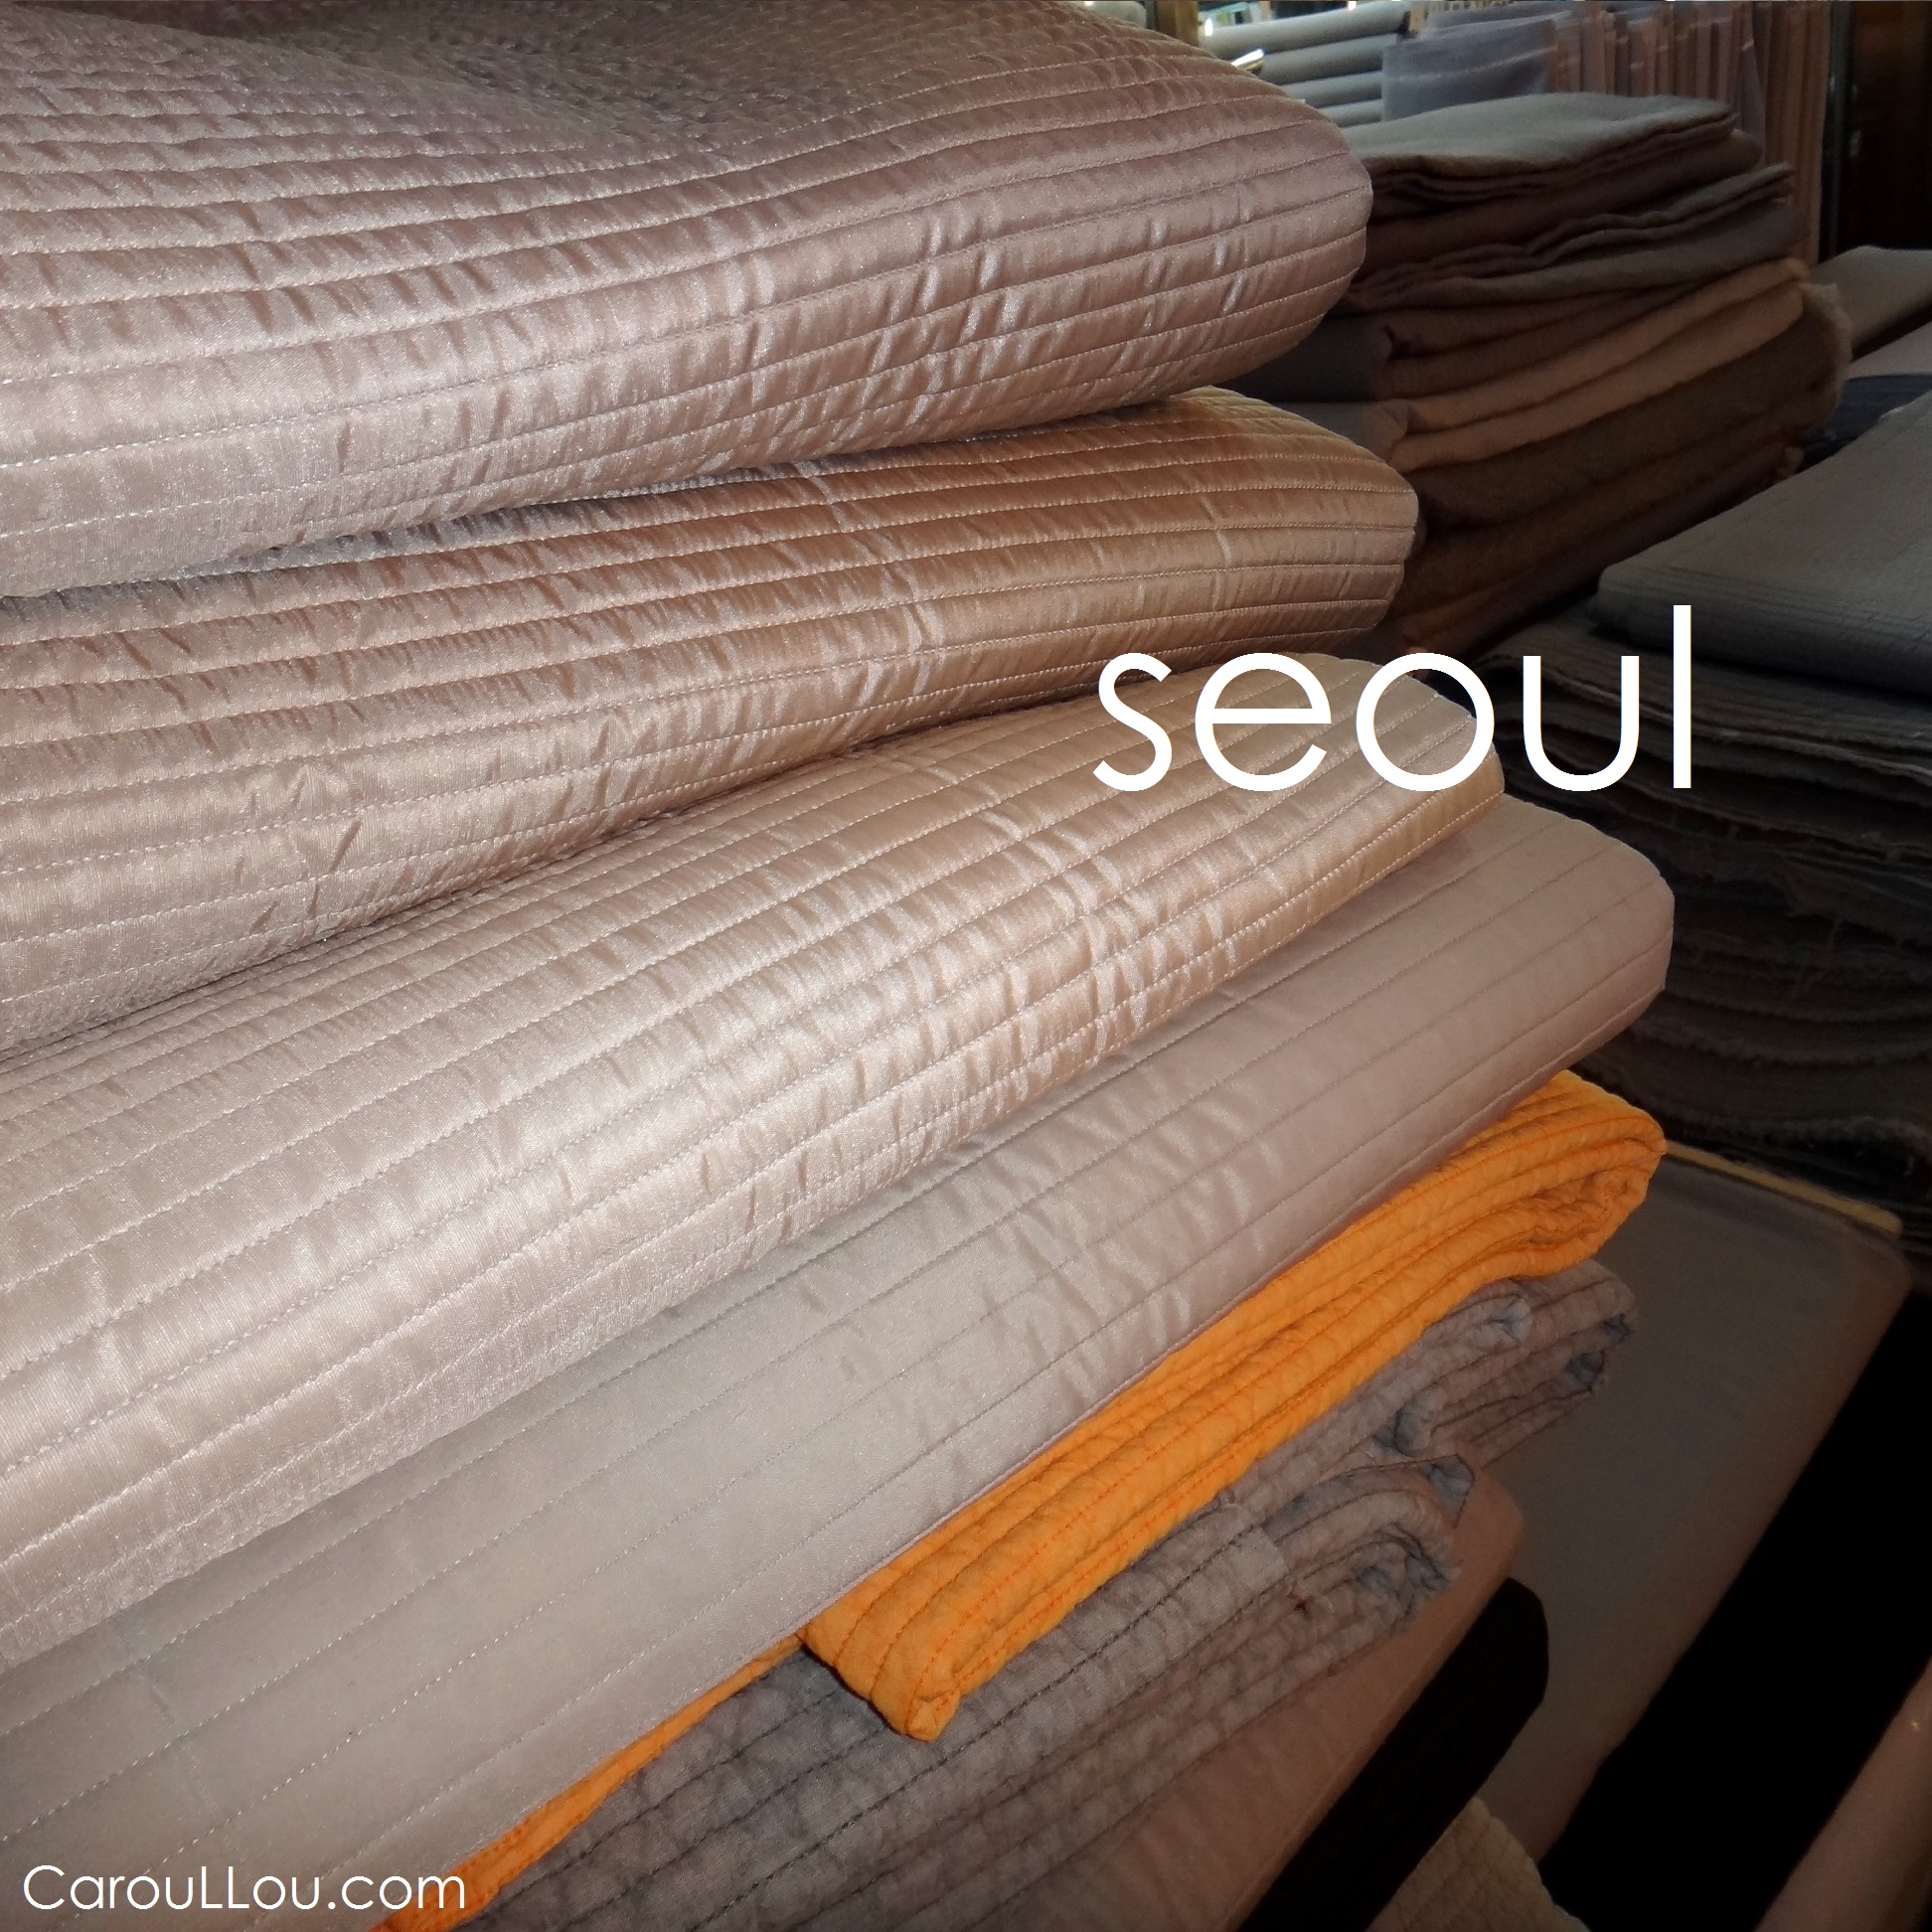 CarouLLou.com Carou LLou in Seoul South Korea material munks +-